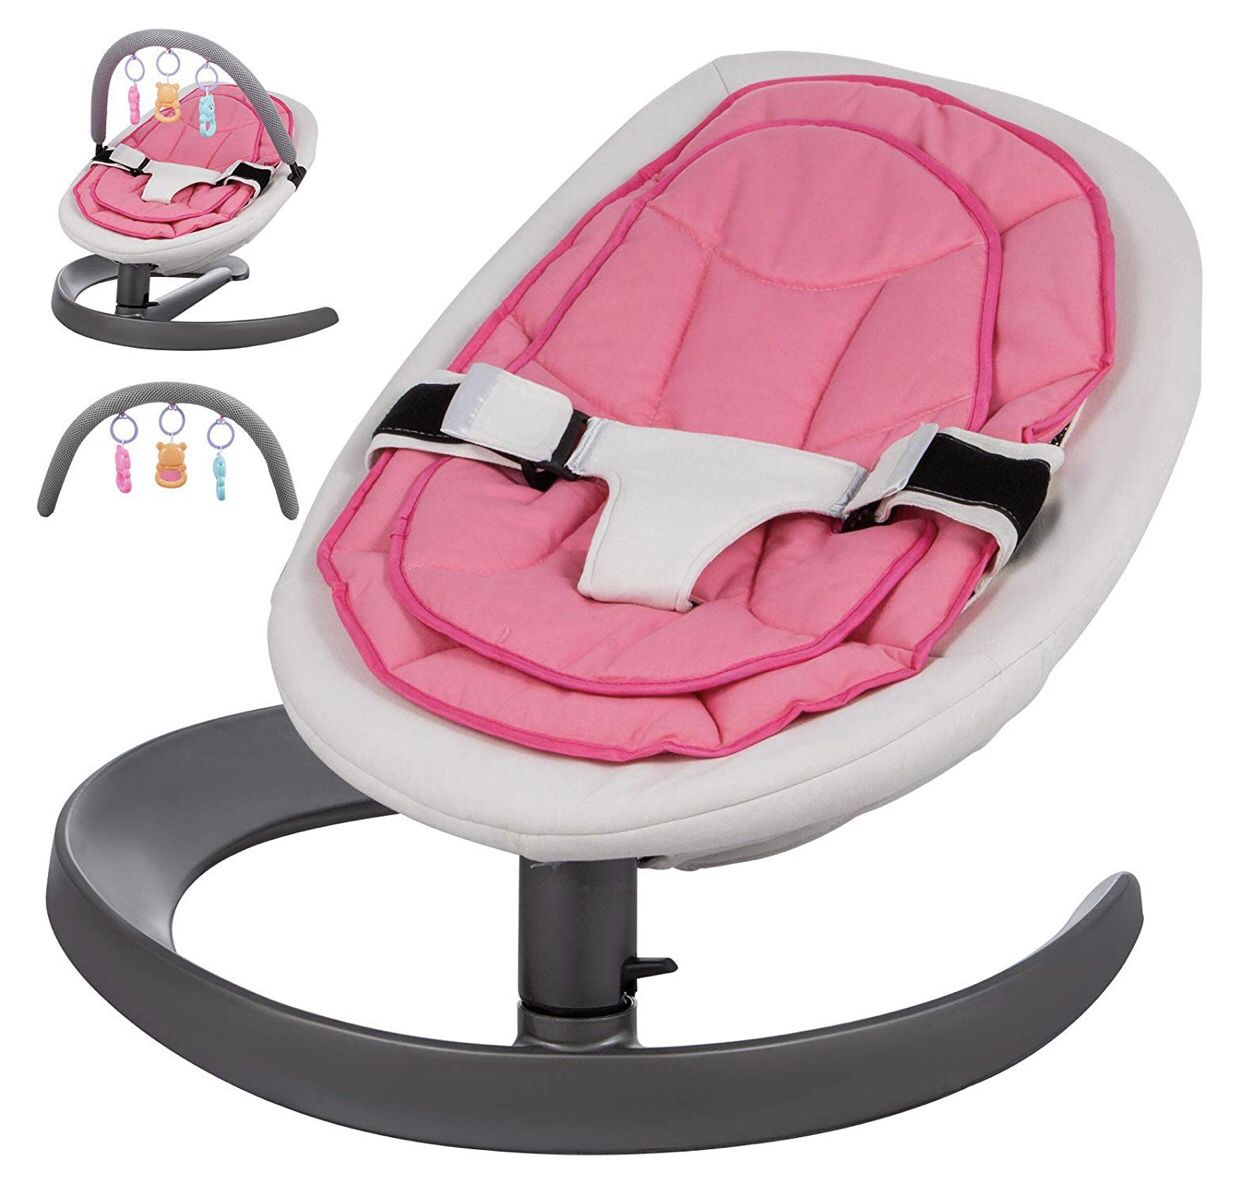 VEVOR Baby Swing Chair for Newborn Toddler Kids Toddler Cradle Seat